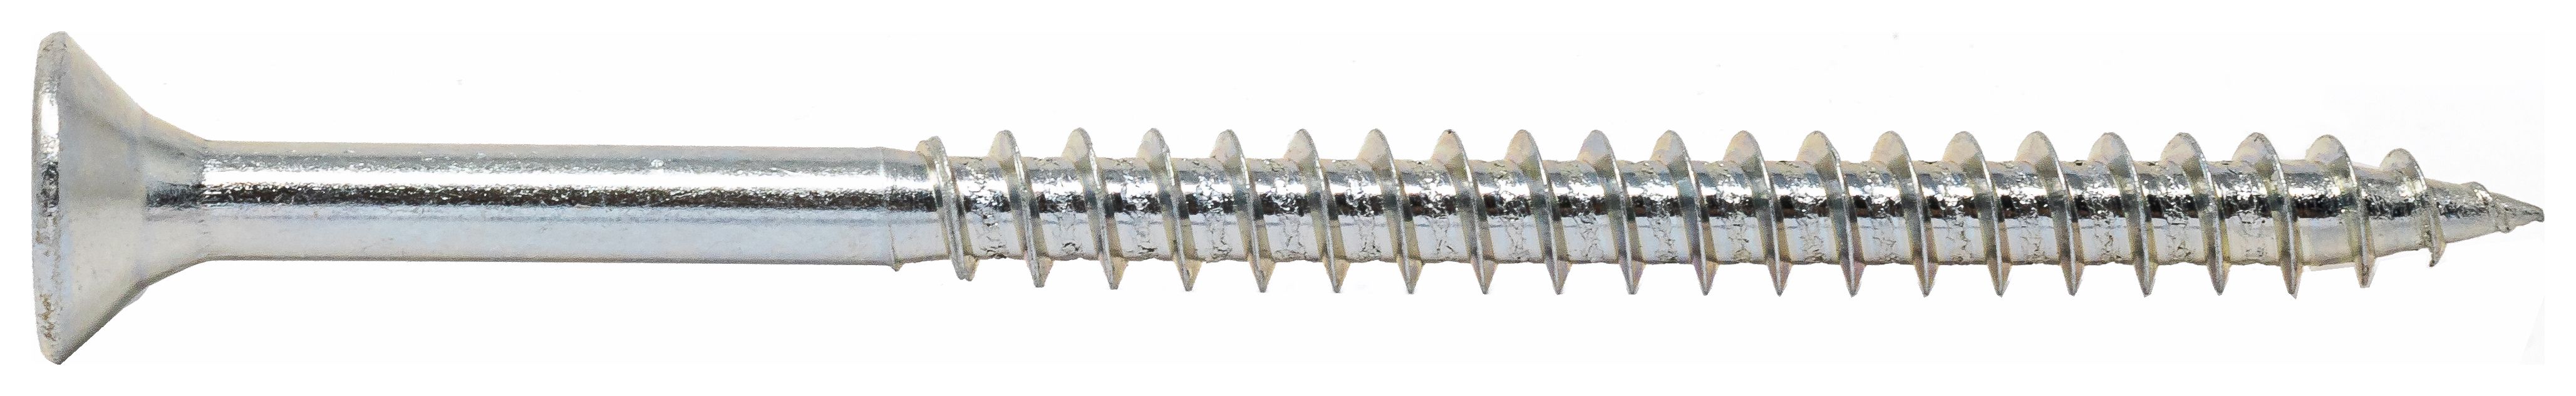 Wickes Single Thread Zinc Plated Screw - 4 X 30mm Pack Of 200